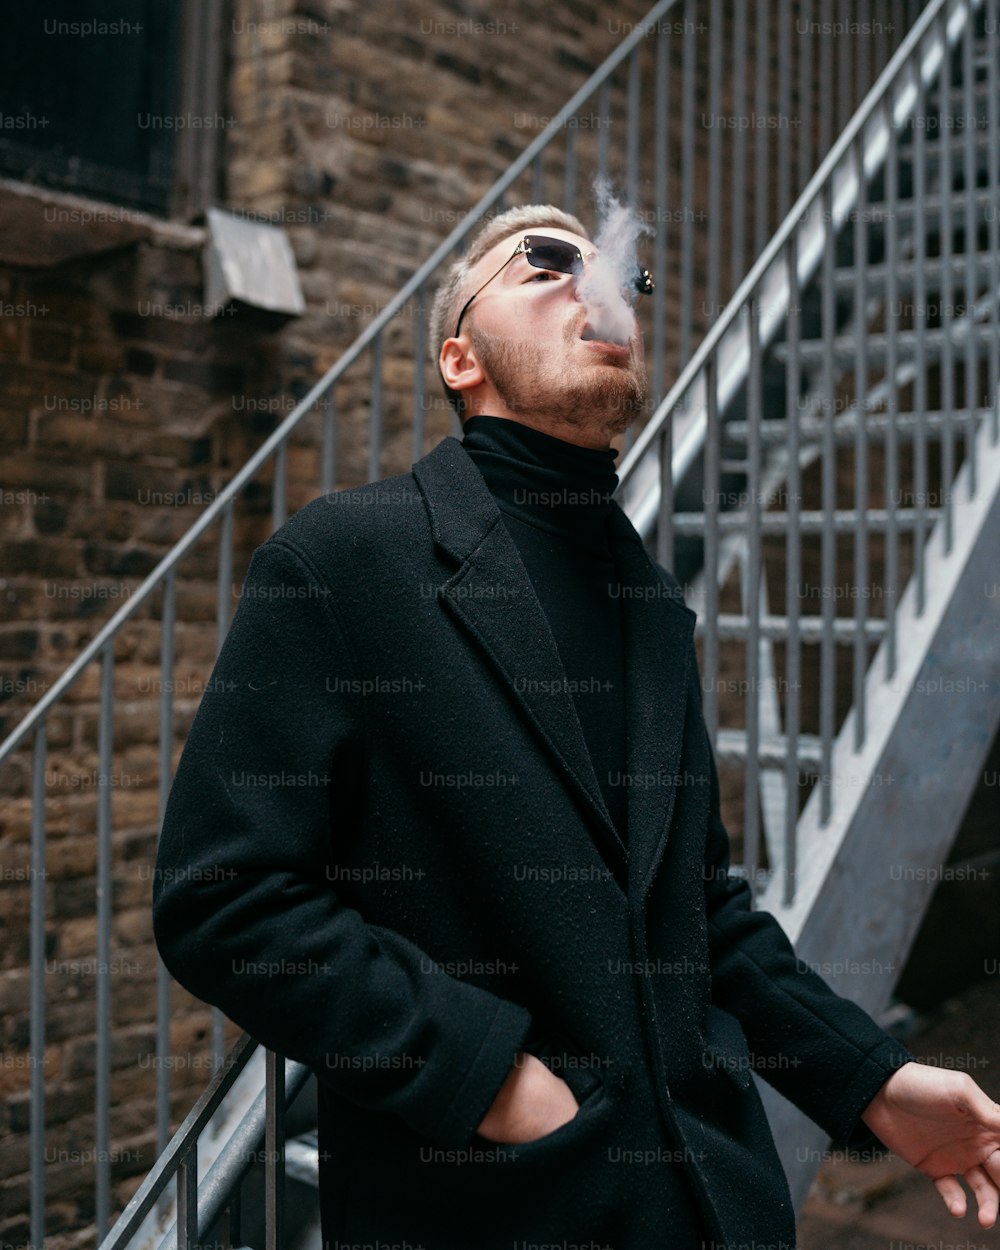 Un hombre fumando un cigarrillo frente a una escalera